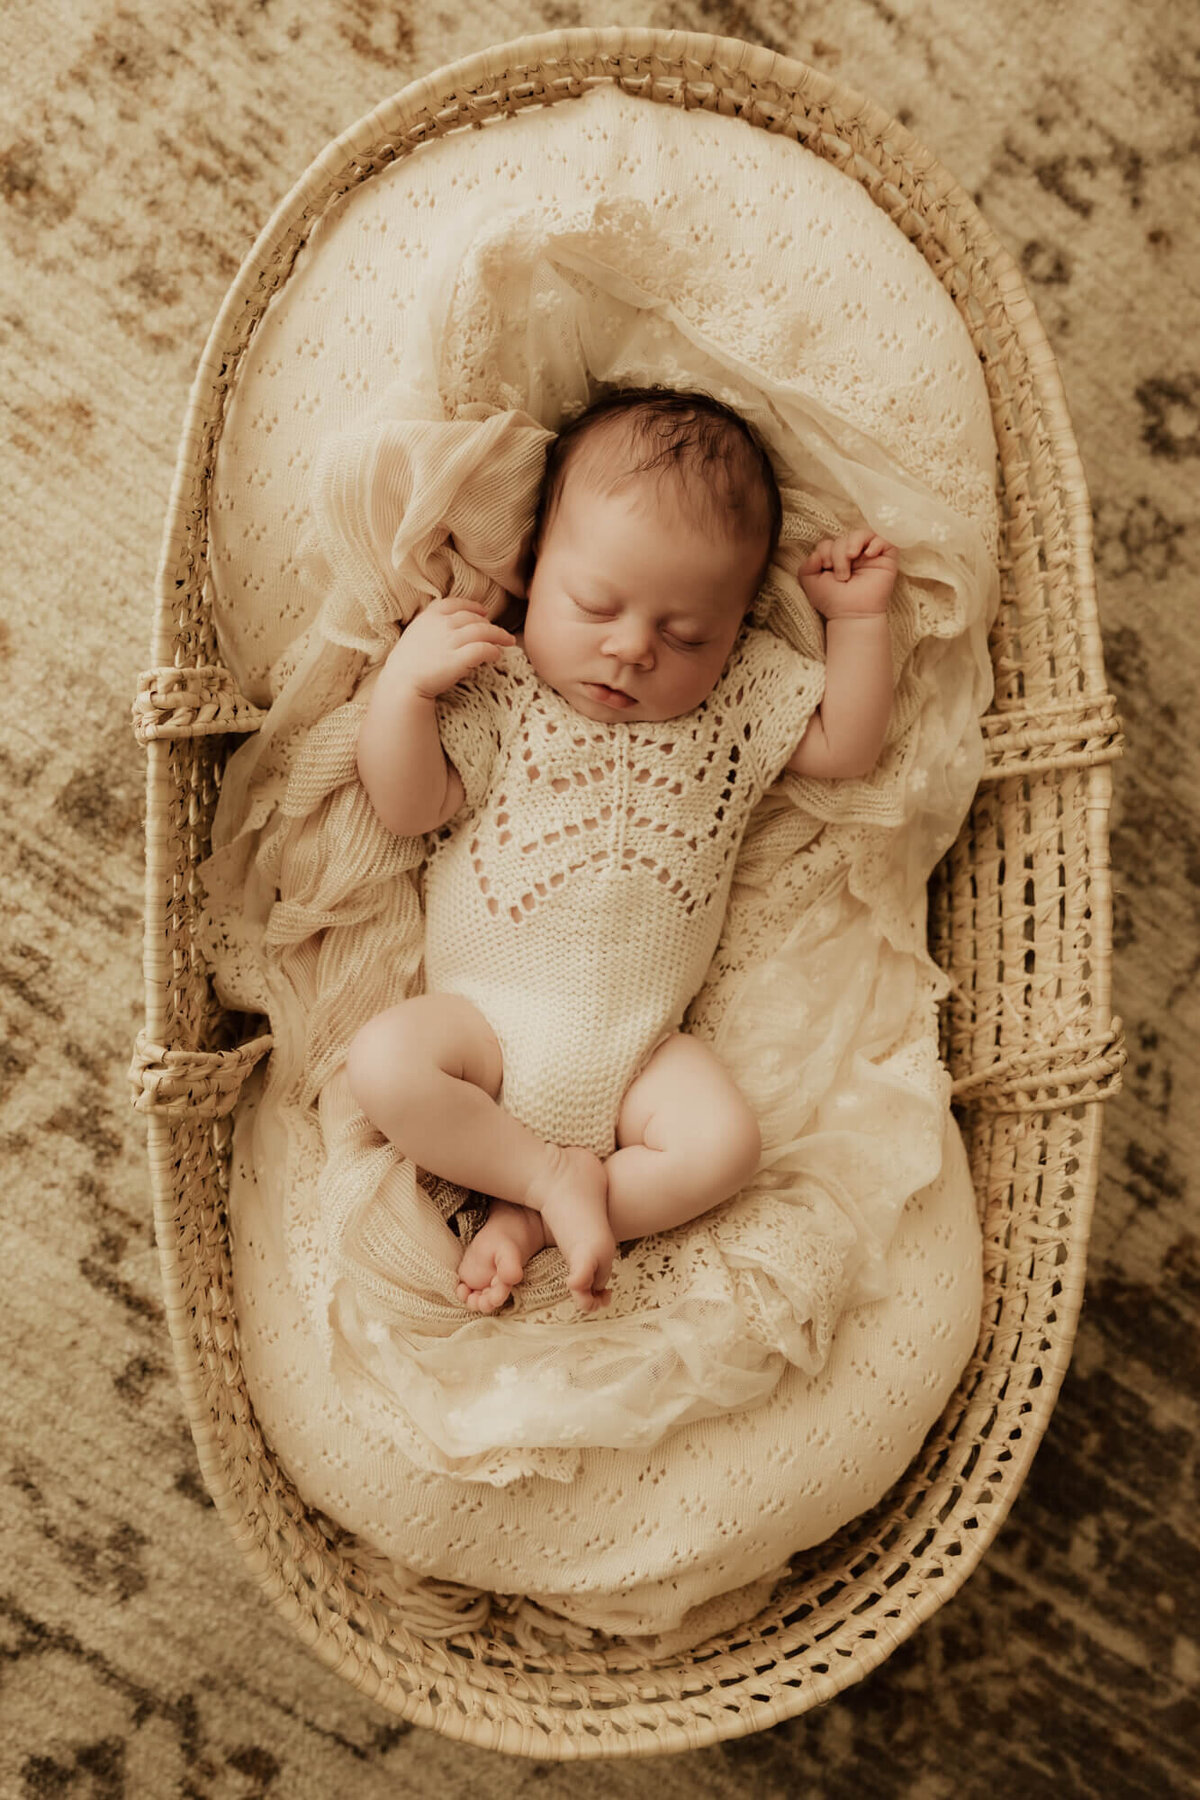 Baby girl in a basket sleeping.